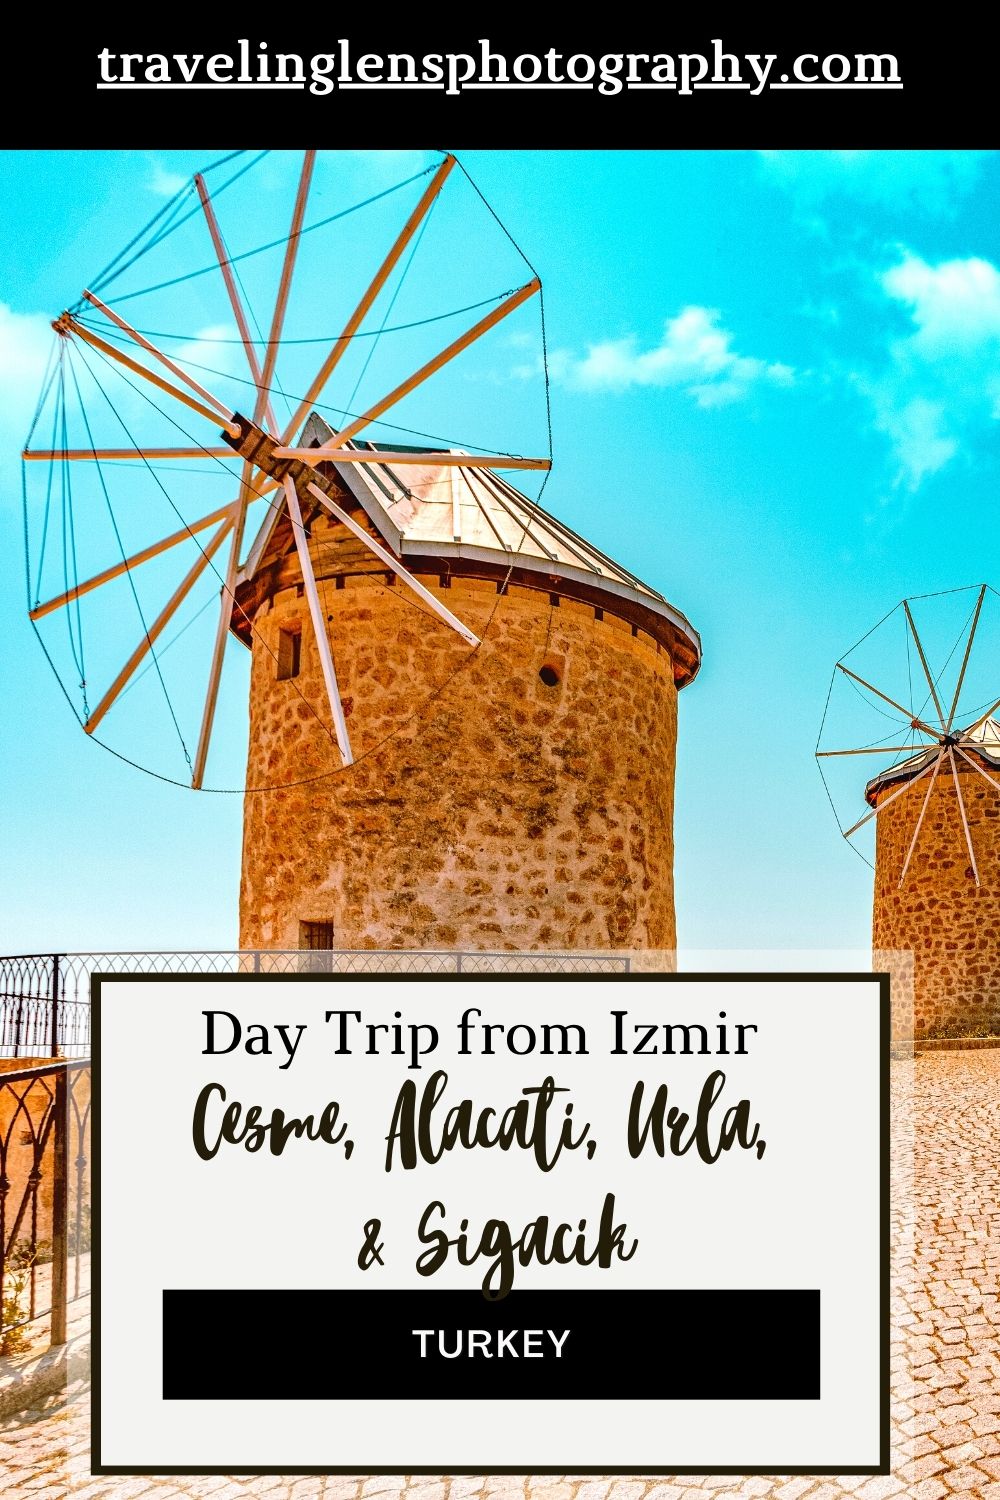 Day Trip from Izmir